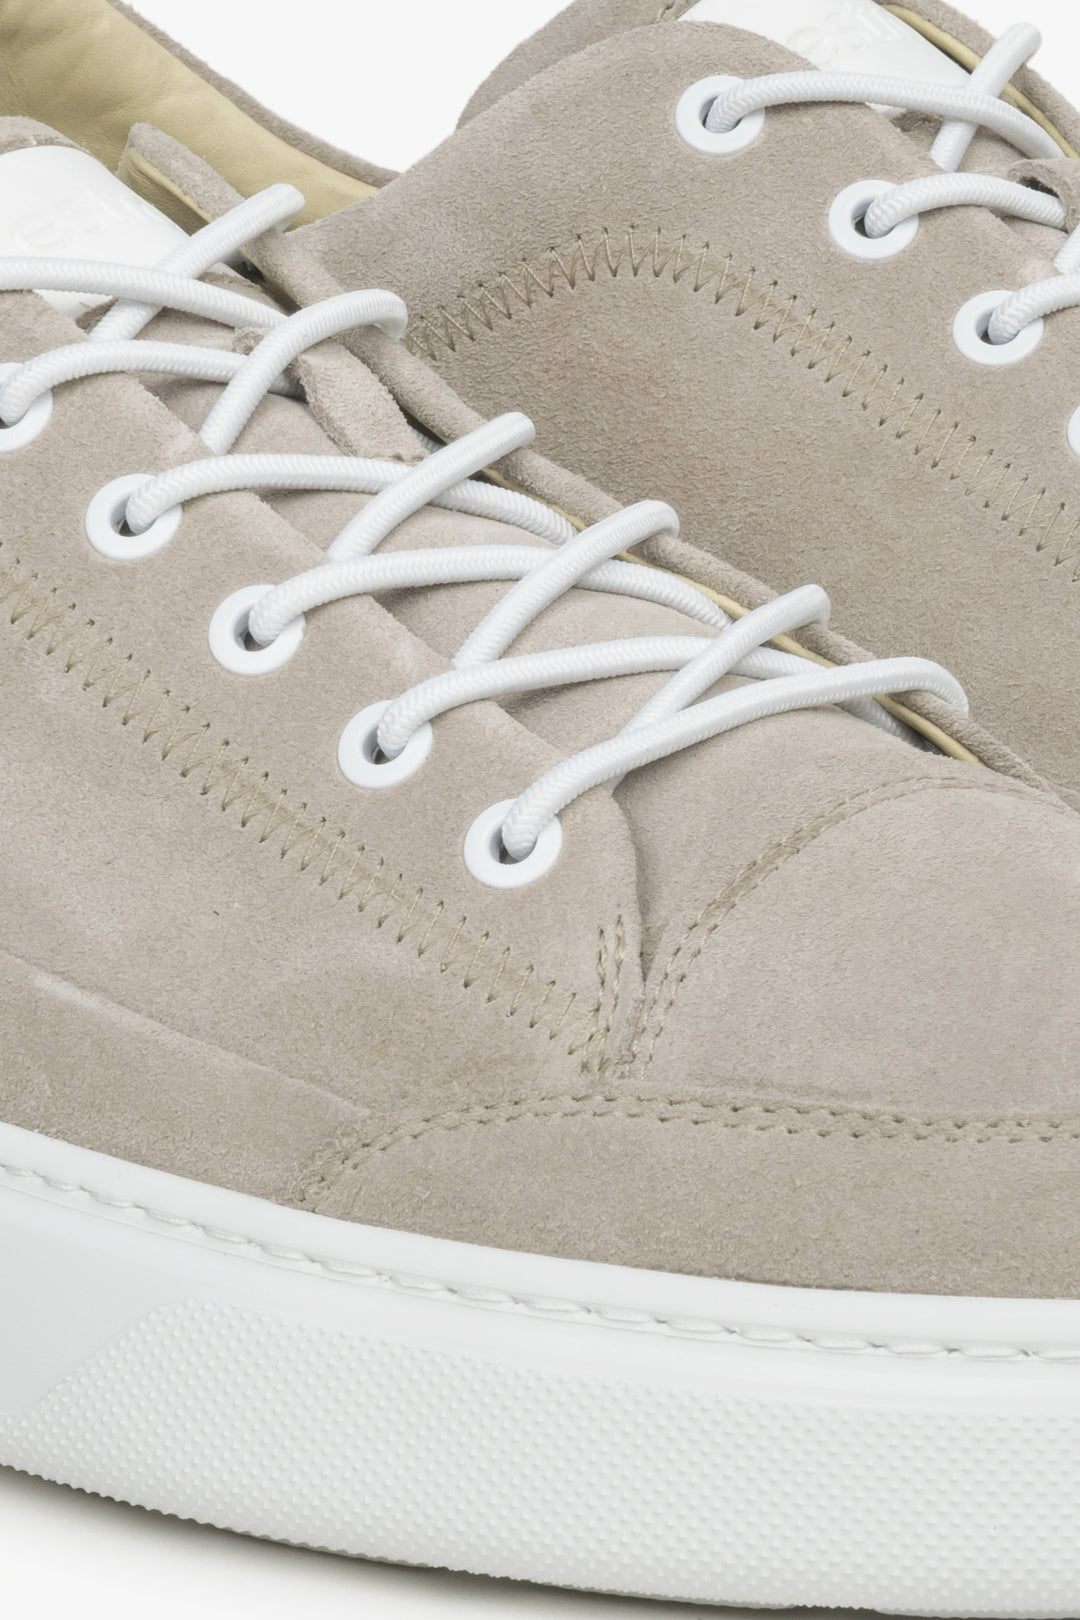 Men's grey velour sneakers by Estro - close-up on details.